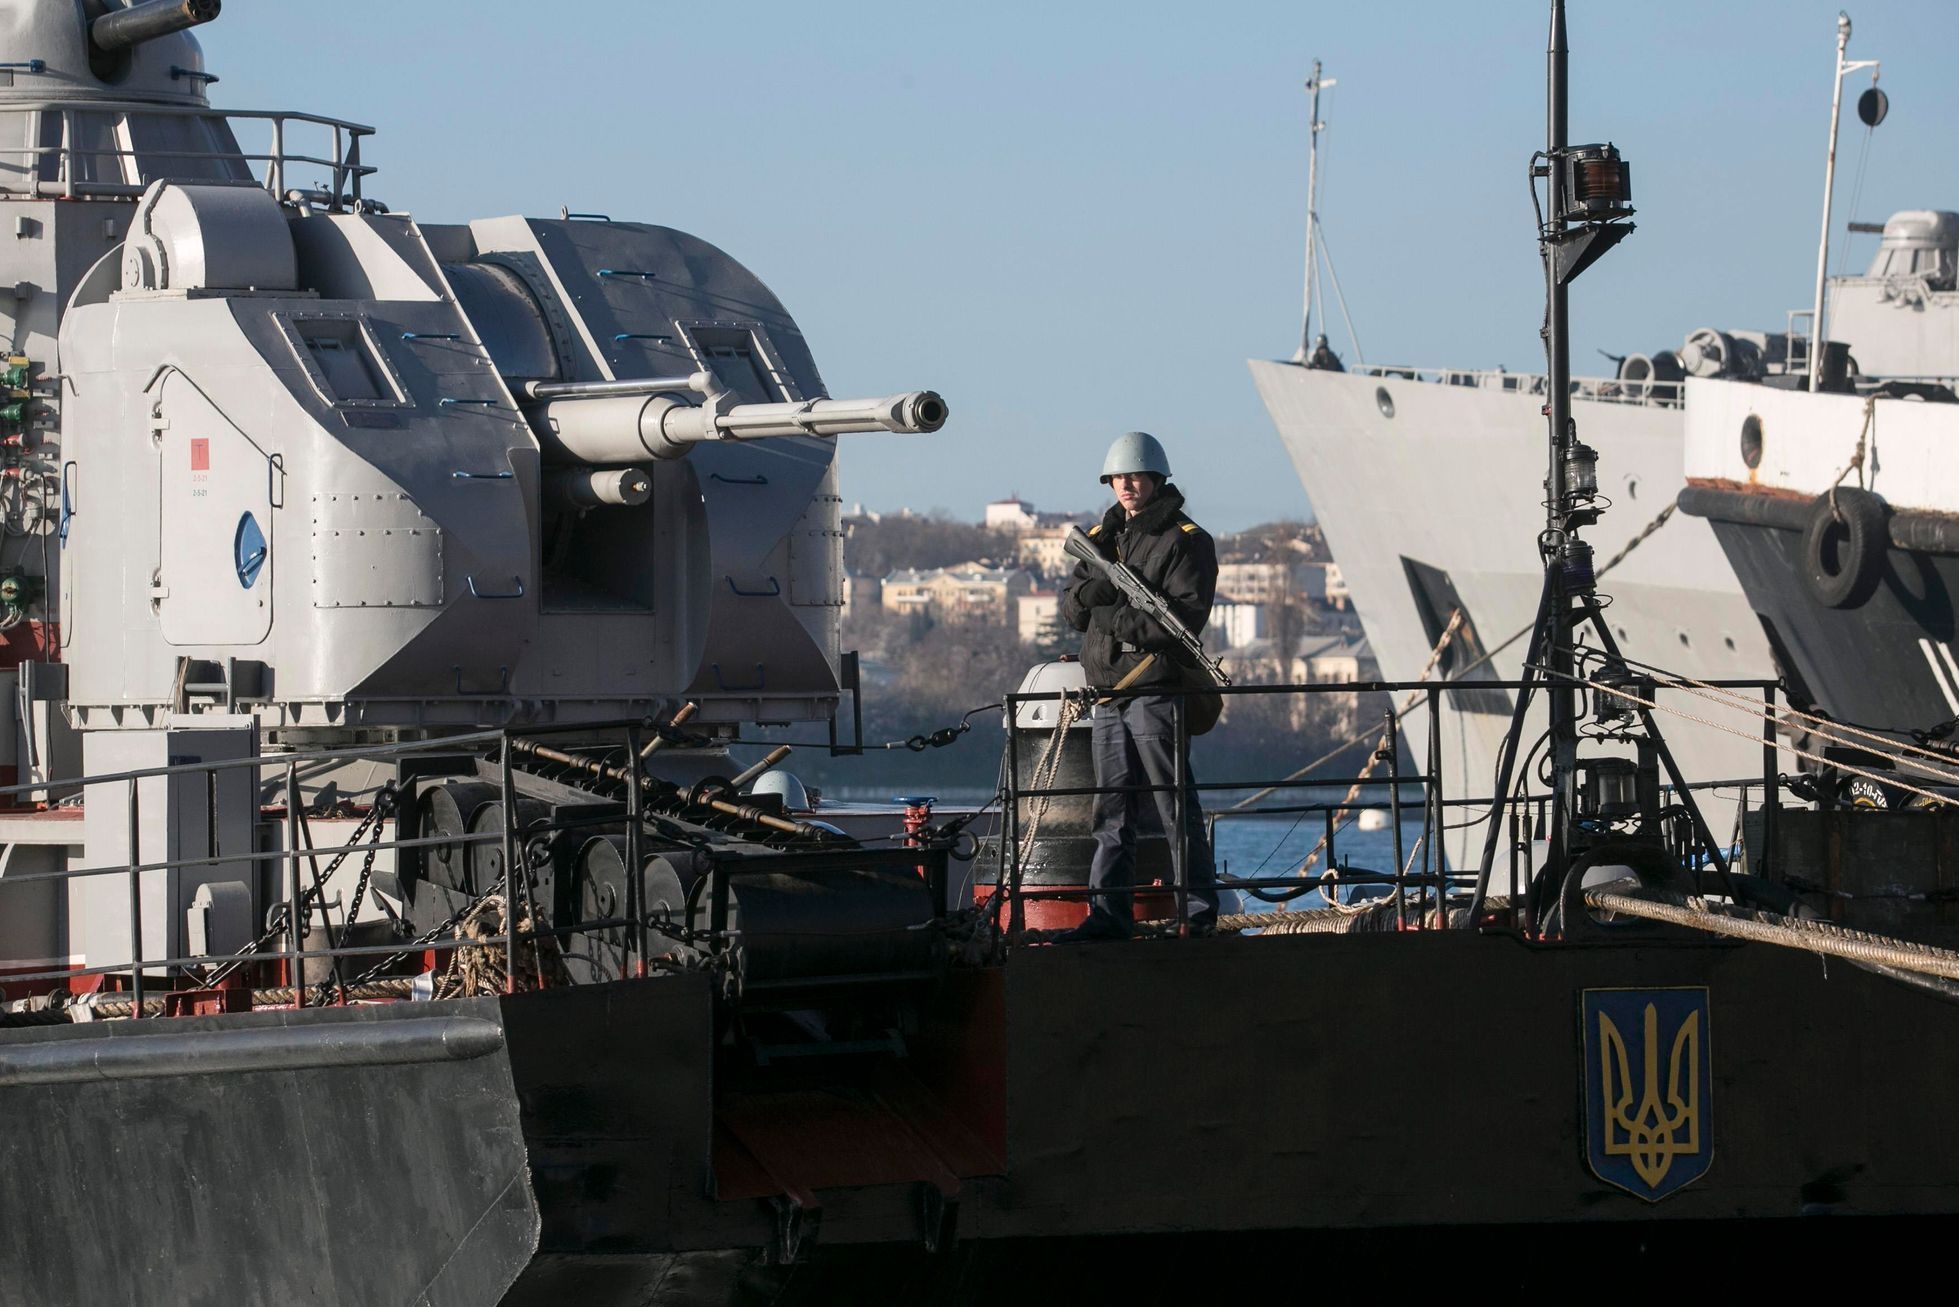 Ukrajina - Krym - Sevastopol - ukrajinské námořnictvo - 5. 3. 2014